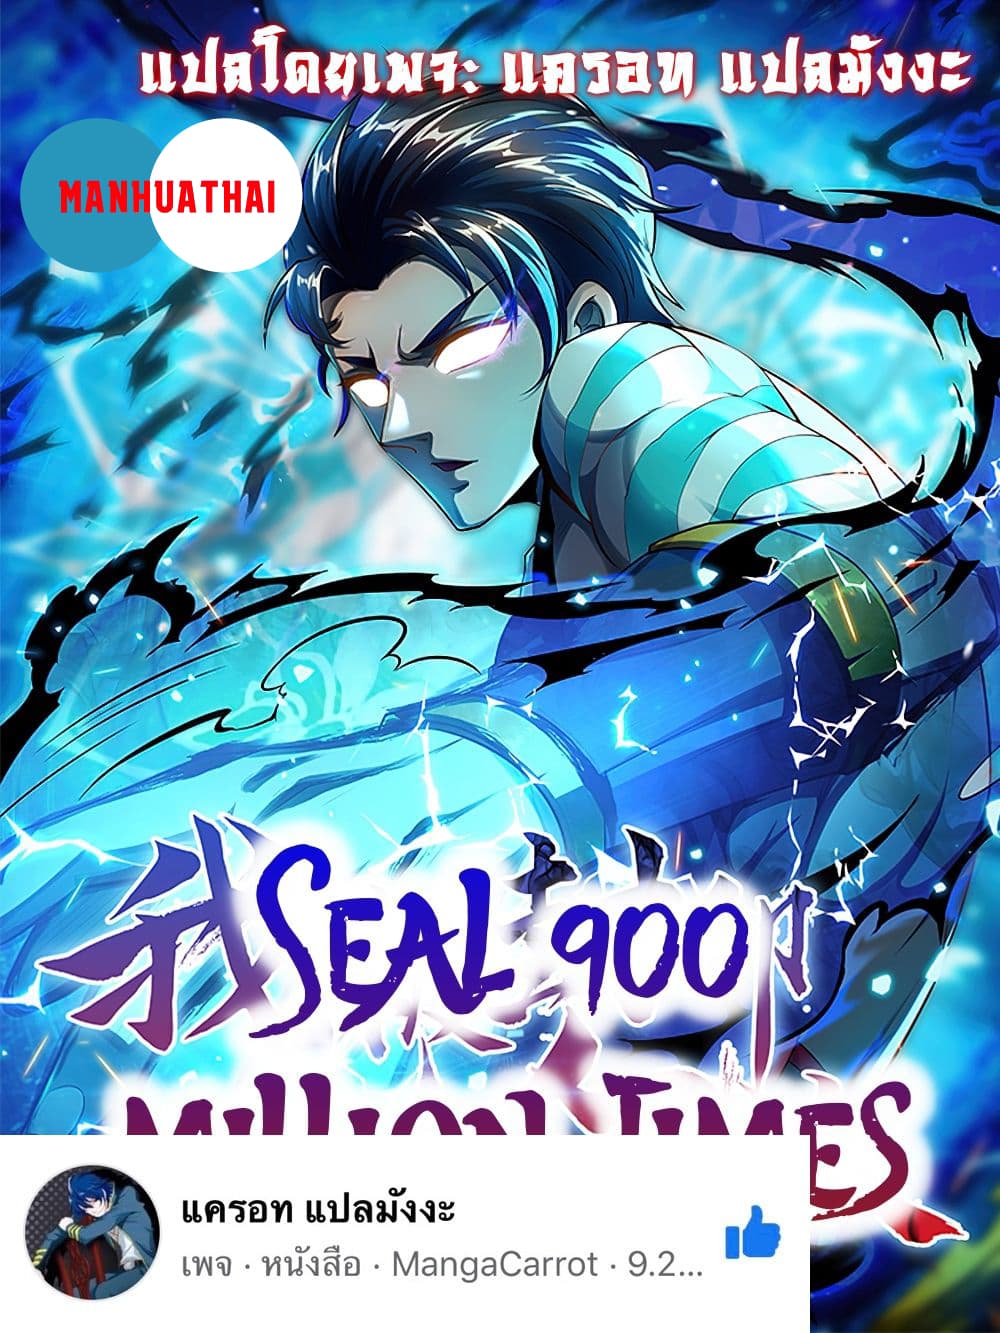 Seal 900 Million Times 22 (1)